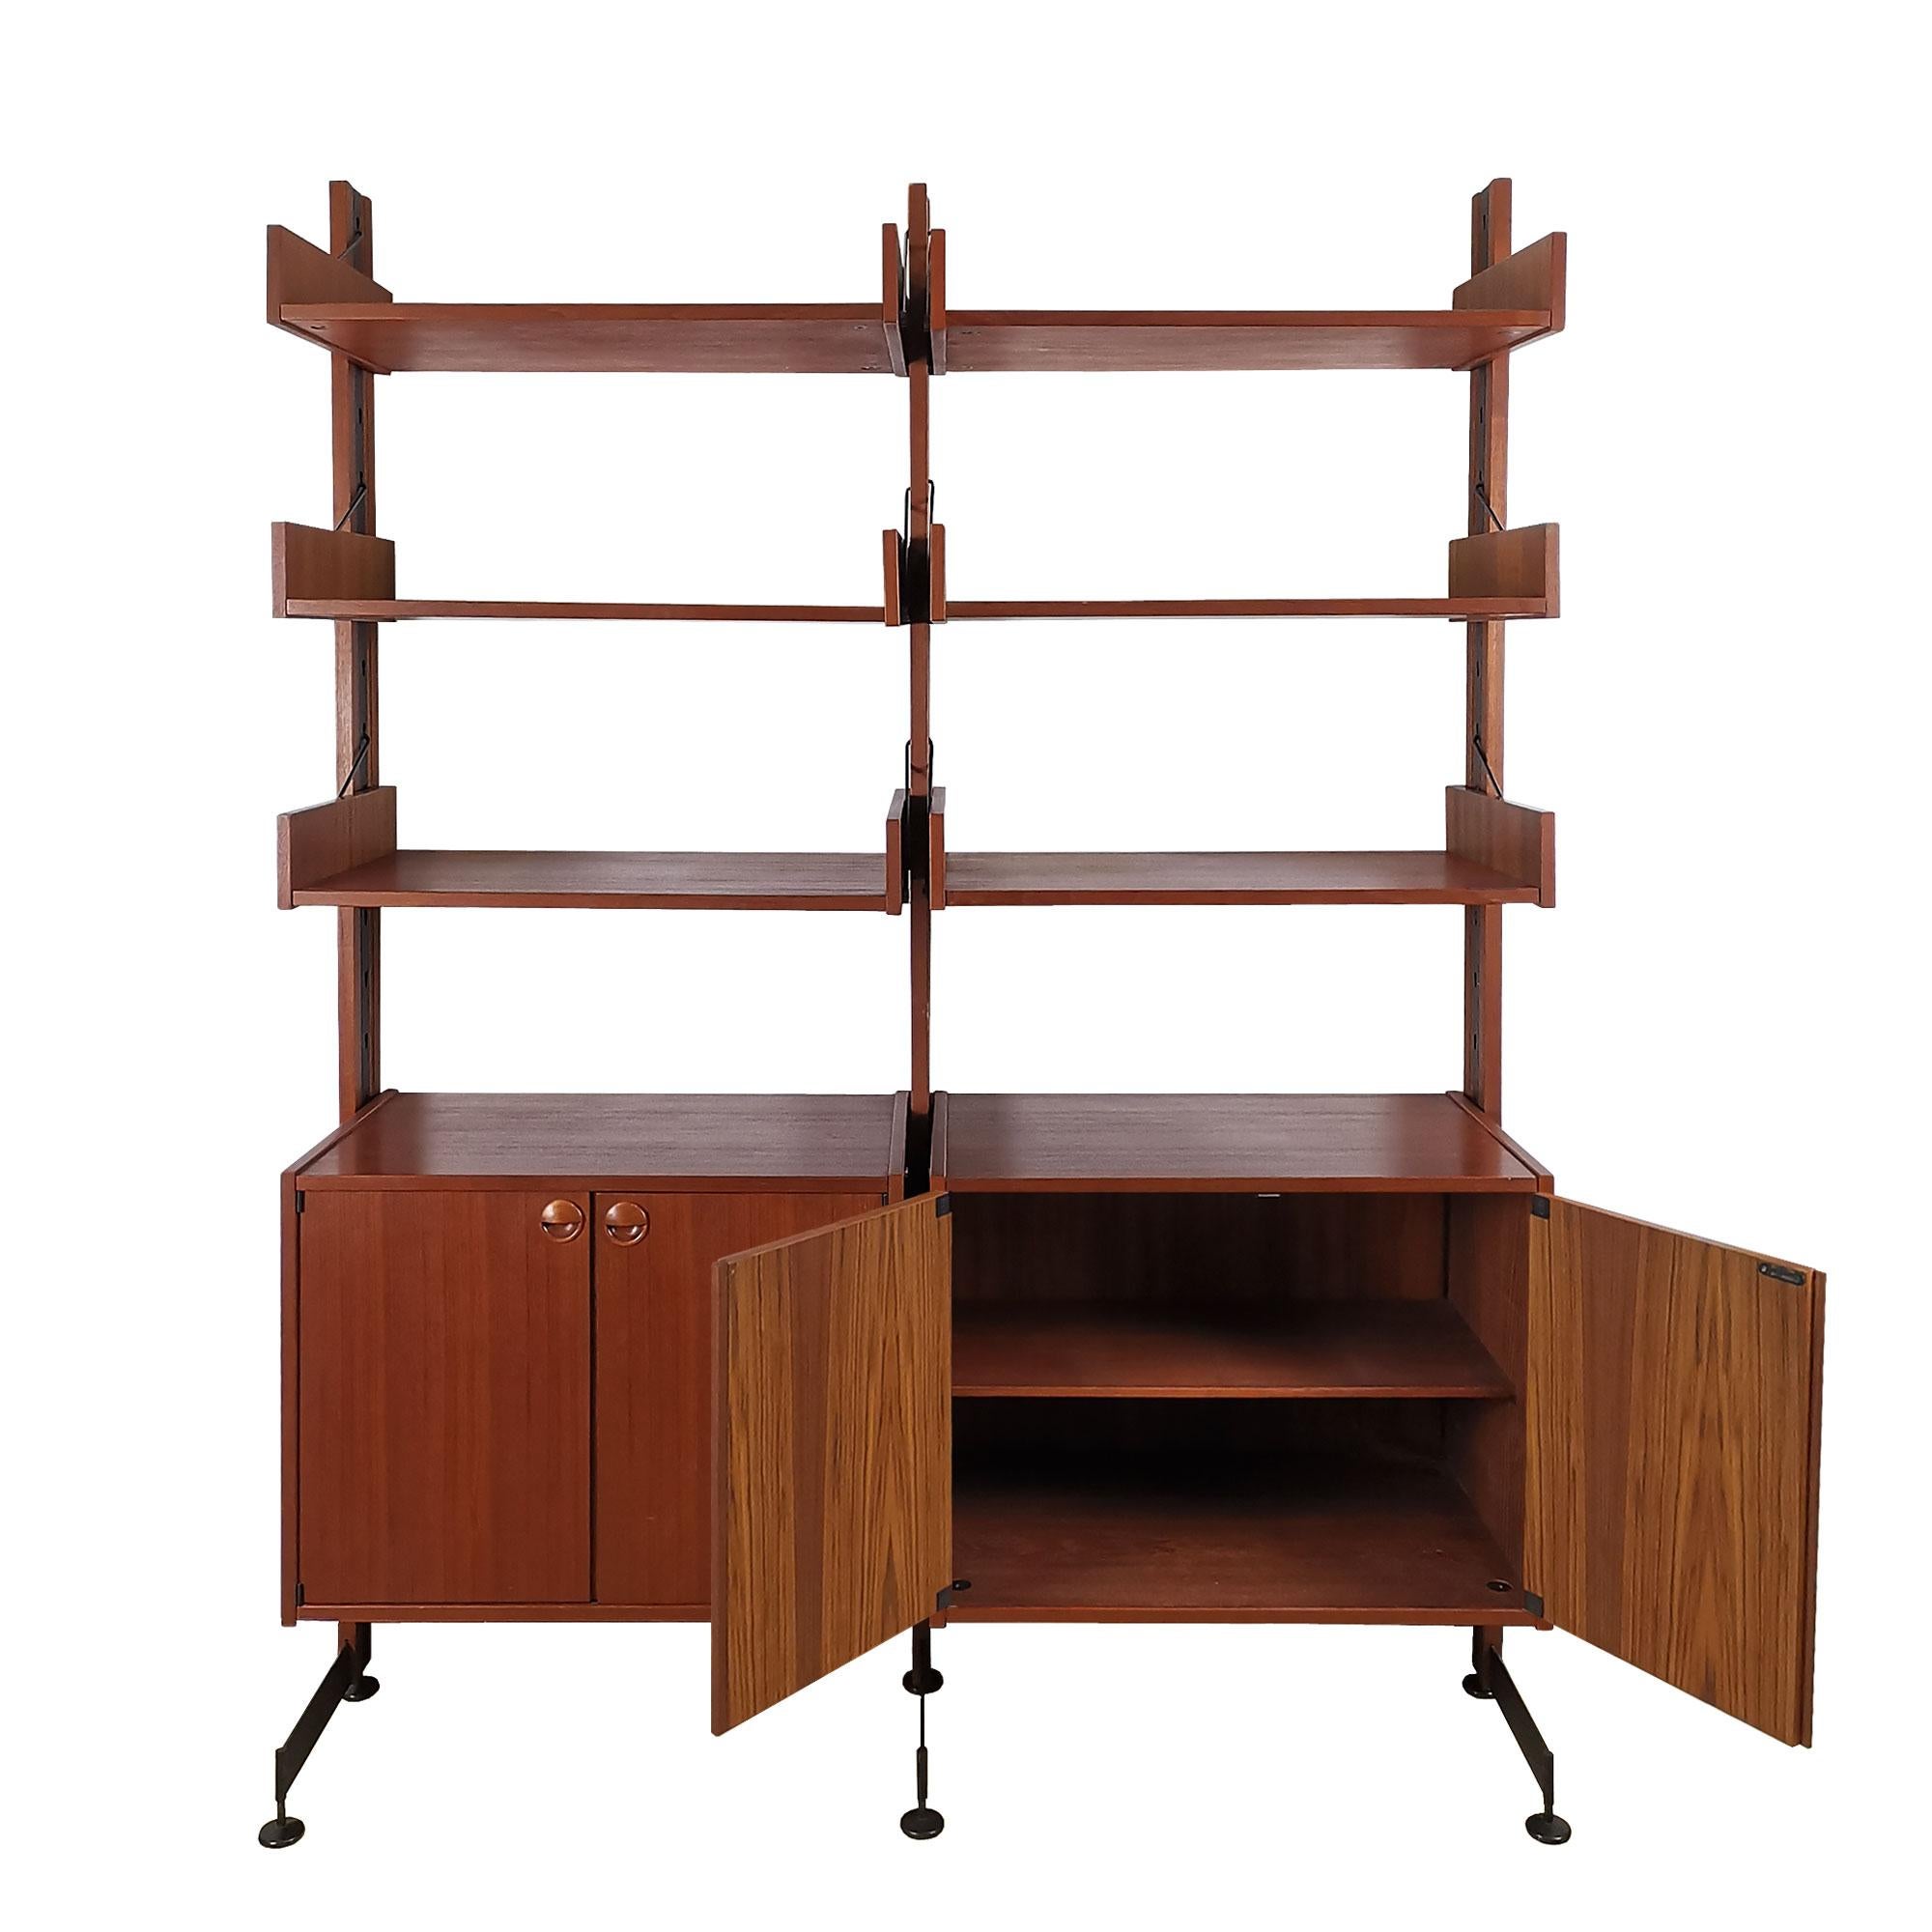 Blackened Mid-Century Modern Modular Cabinet with Six Shelves, Teak, Steel, Brass - Italy For Sale